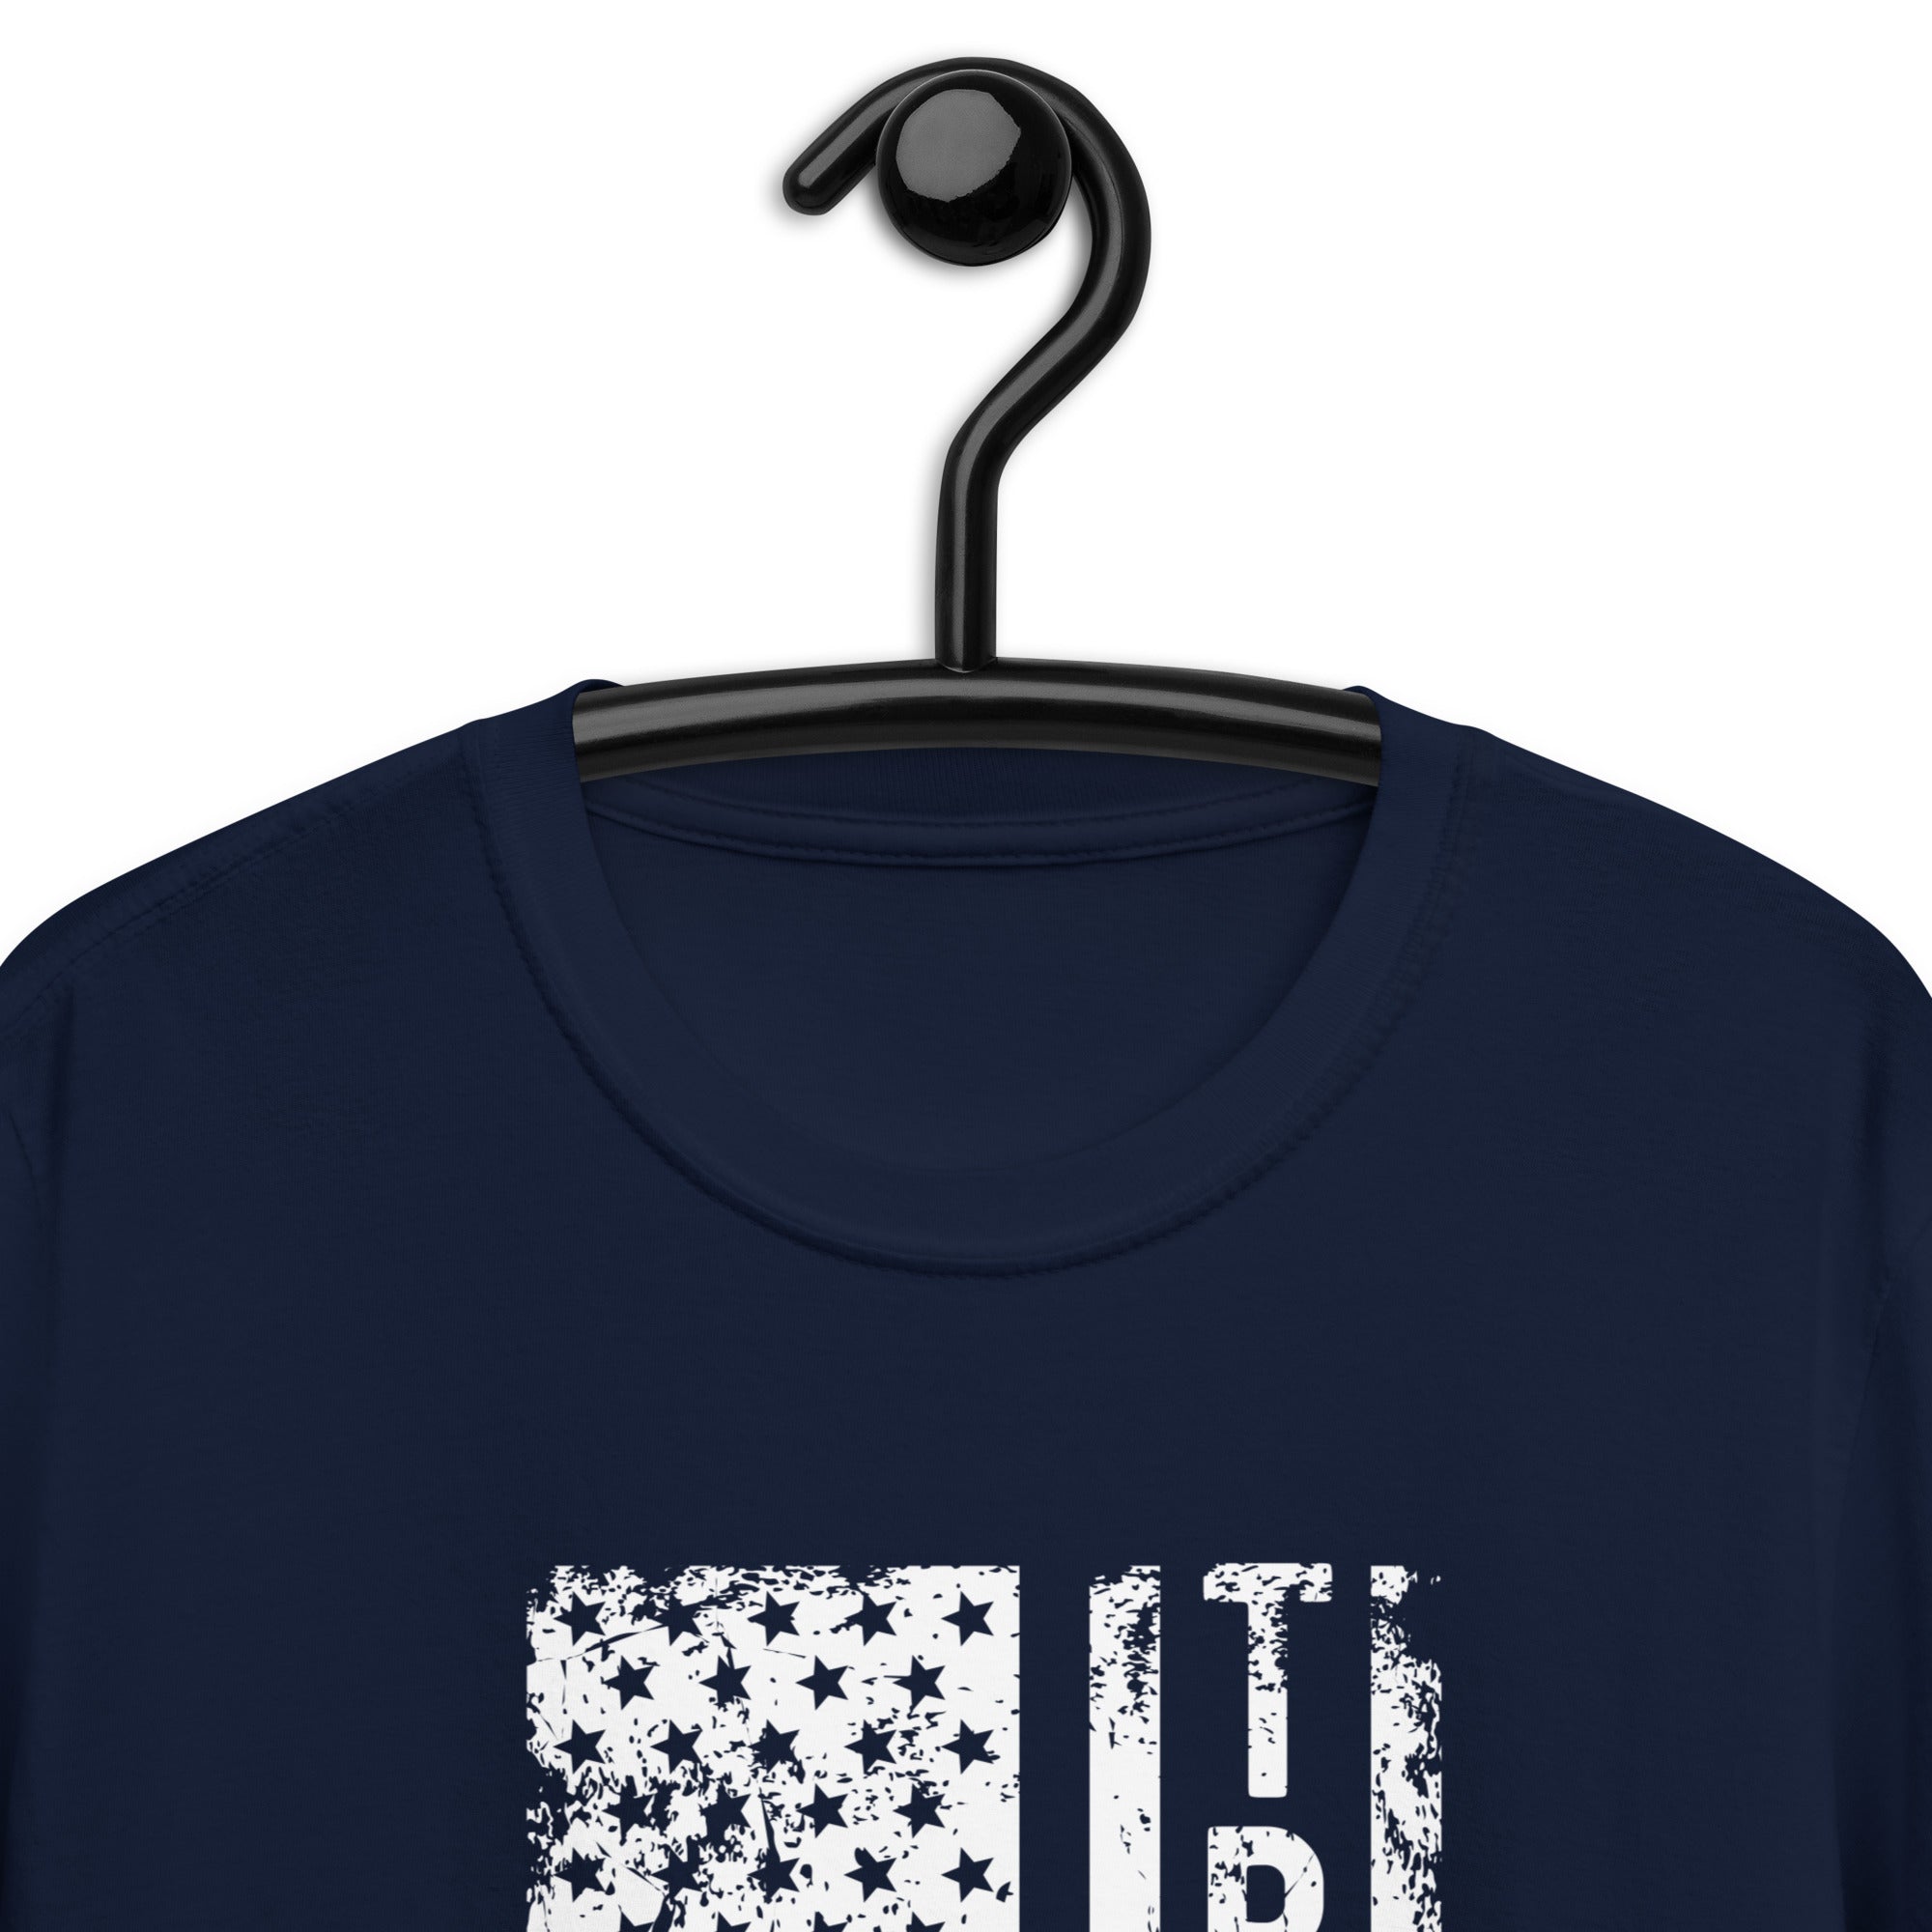 Short-Sleeve Unisex T-Shirt | Trader (deisgn on American flag)